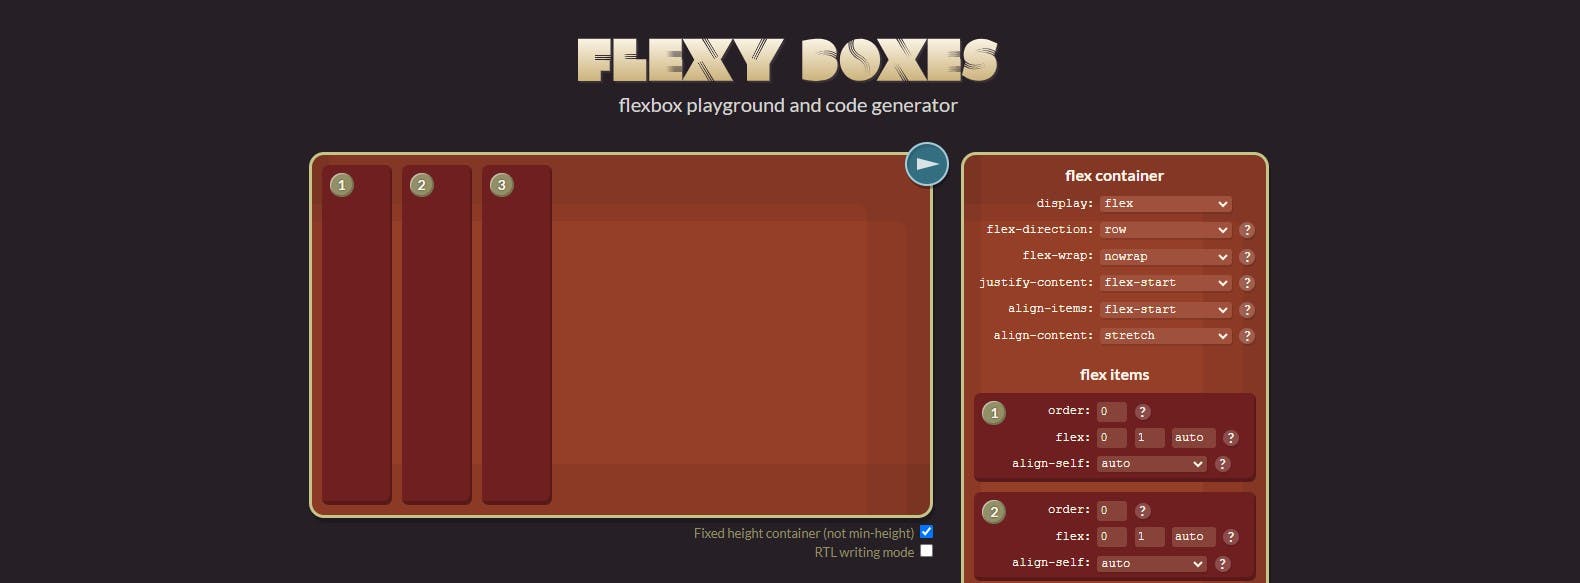 Flexyboxes